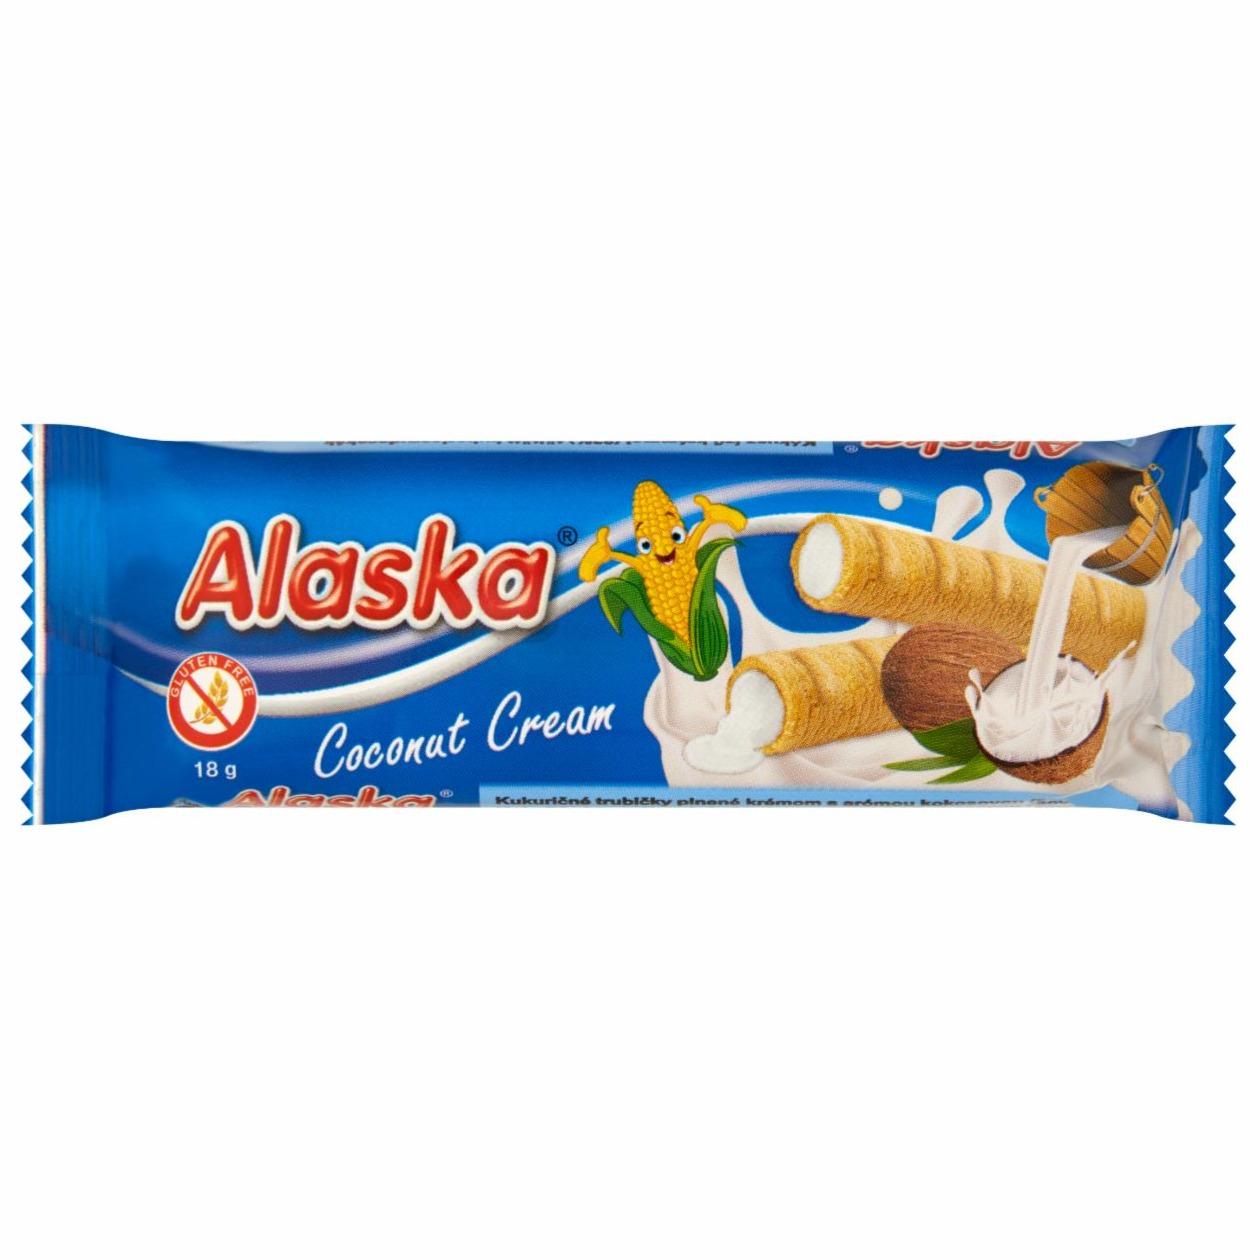 Zdjęcia - Coconut cream Alaska